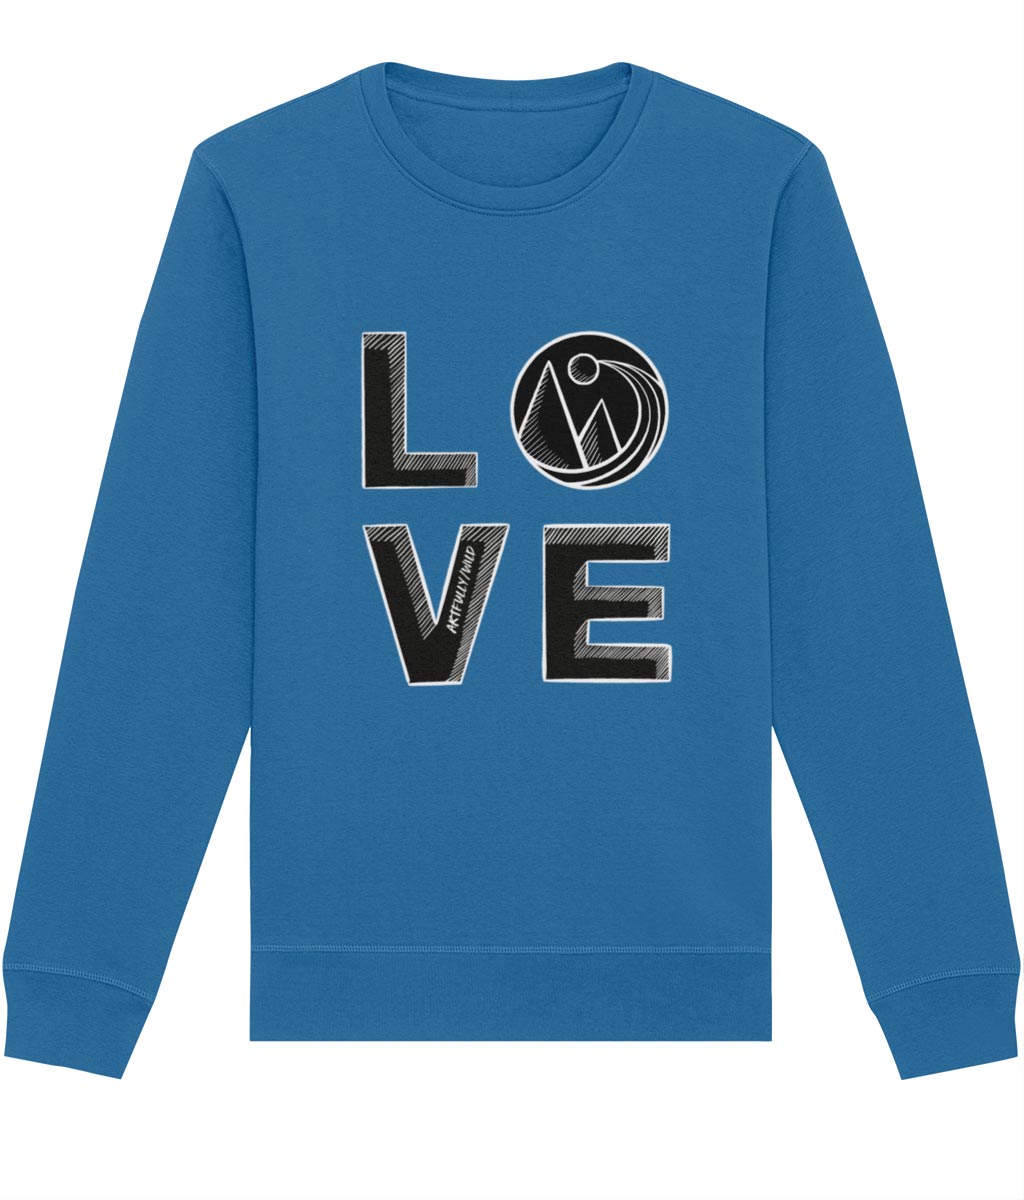 BIG LOVE Organic Royal Blue Crew Neck Sweatshirt. Eco-friendly Clothing. Unisex/Women/Men. Illustration Icon by Artfully/Wild UK.